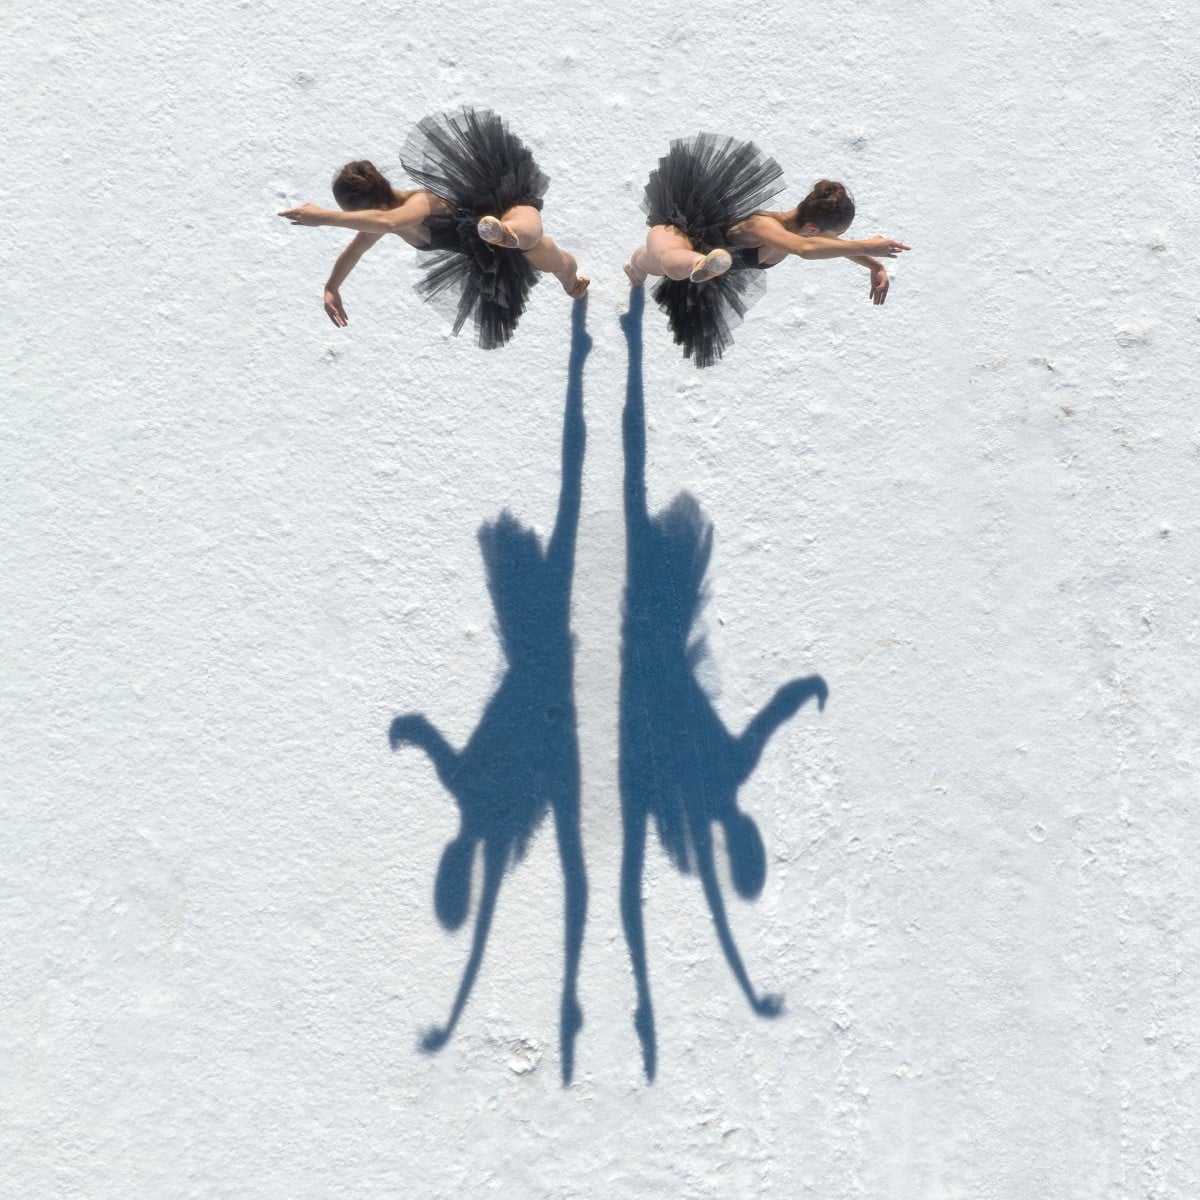 Two ballerinas on Utah's salt flats